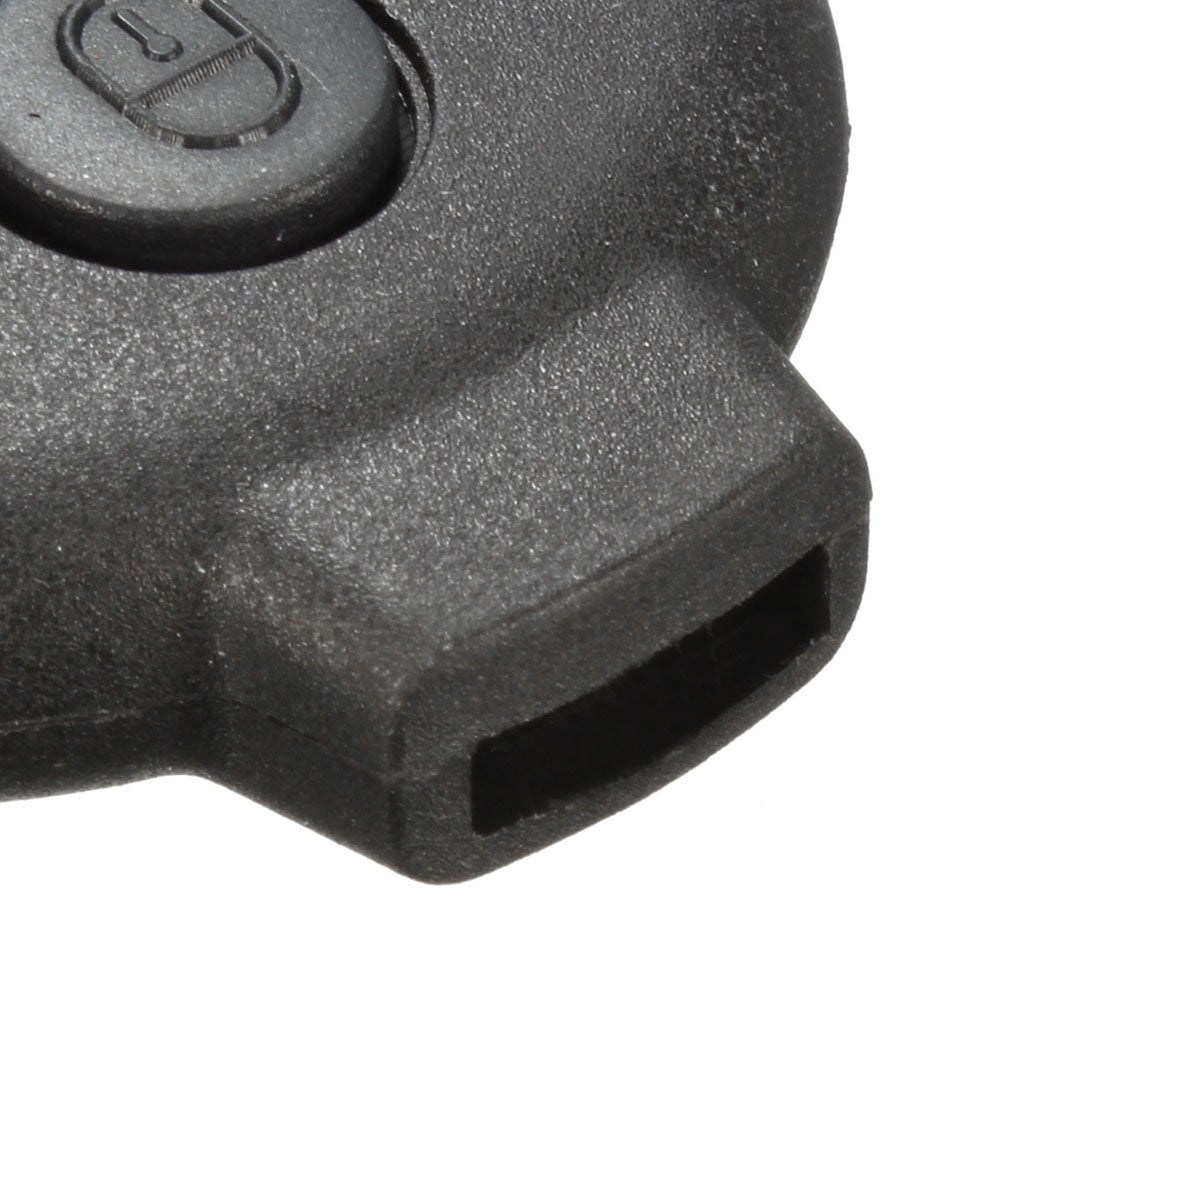 Dim Gray 3 Button Car Remote Control Key FOB Shell Case For 451 Fortwo Cabrio Roadstar Coupe